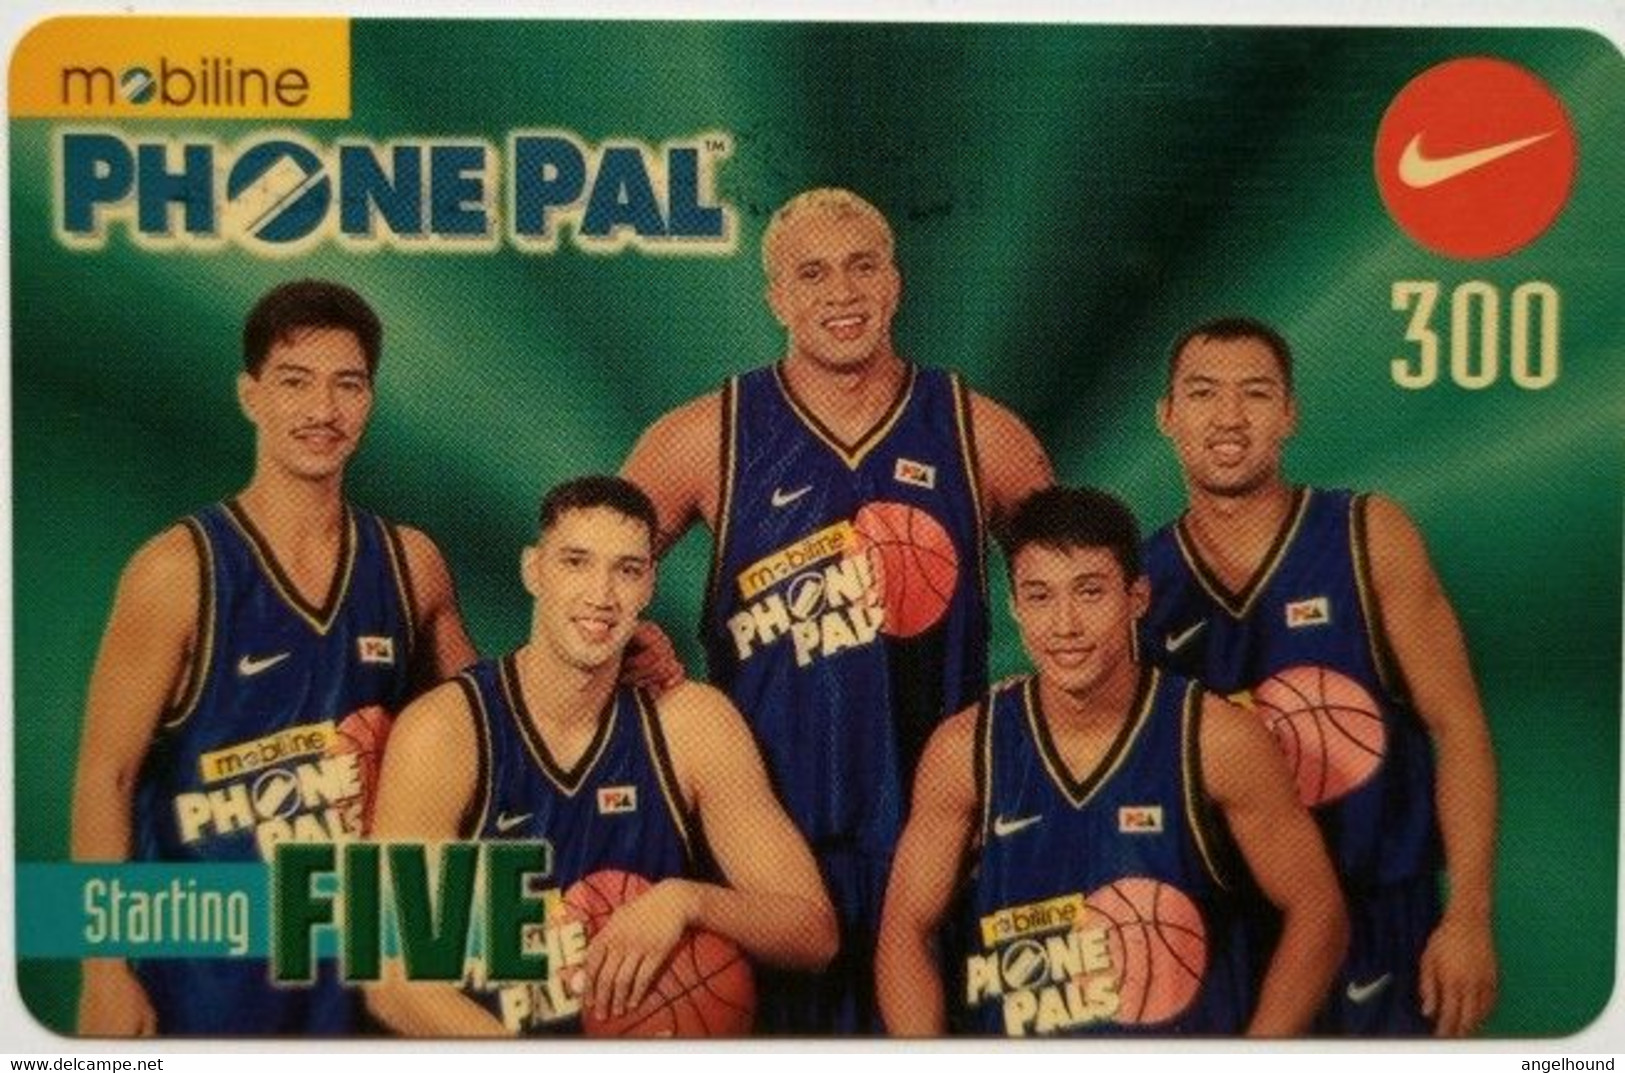 Philippines Mobiline Phonepal 300 Peso " Basketball " - Philippines